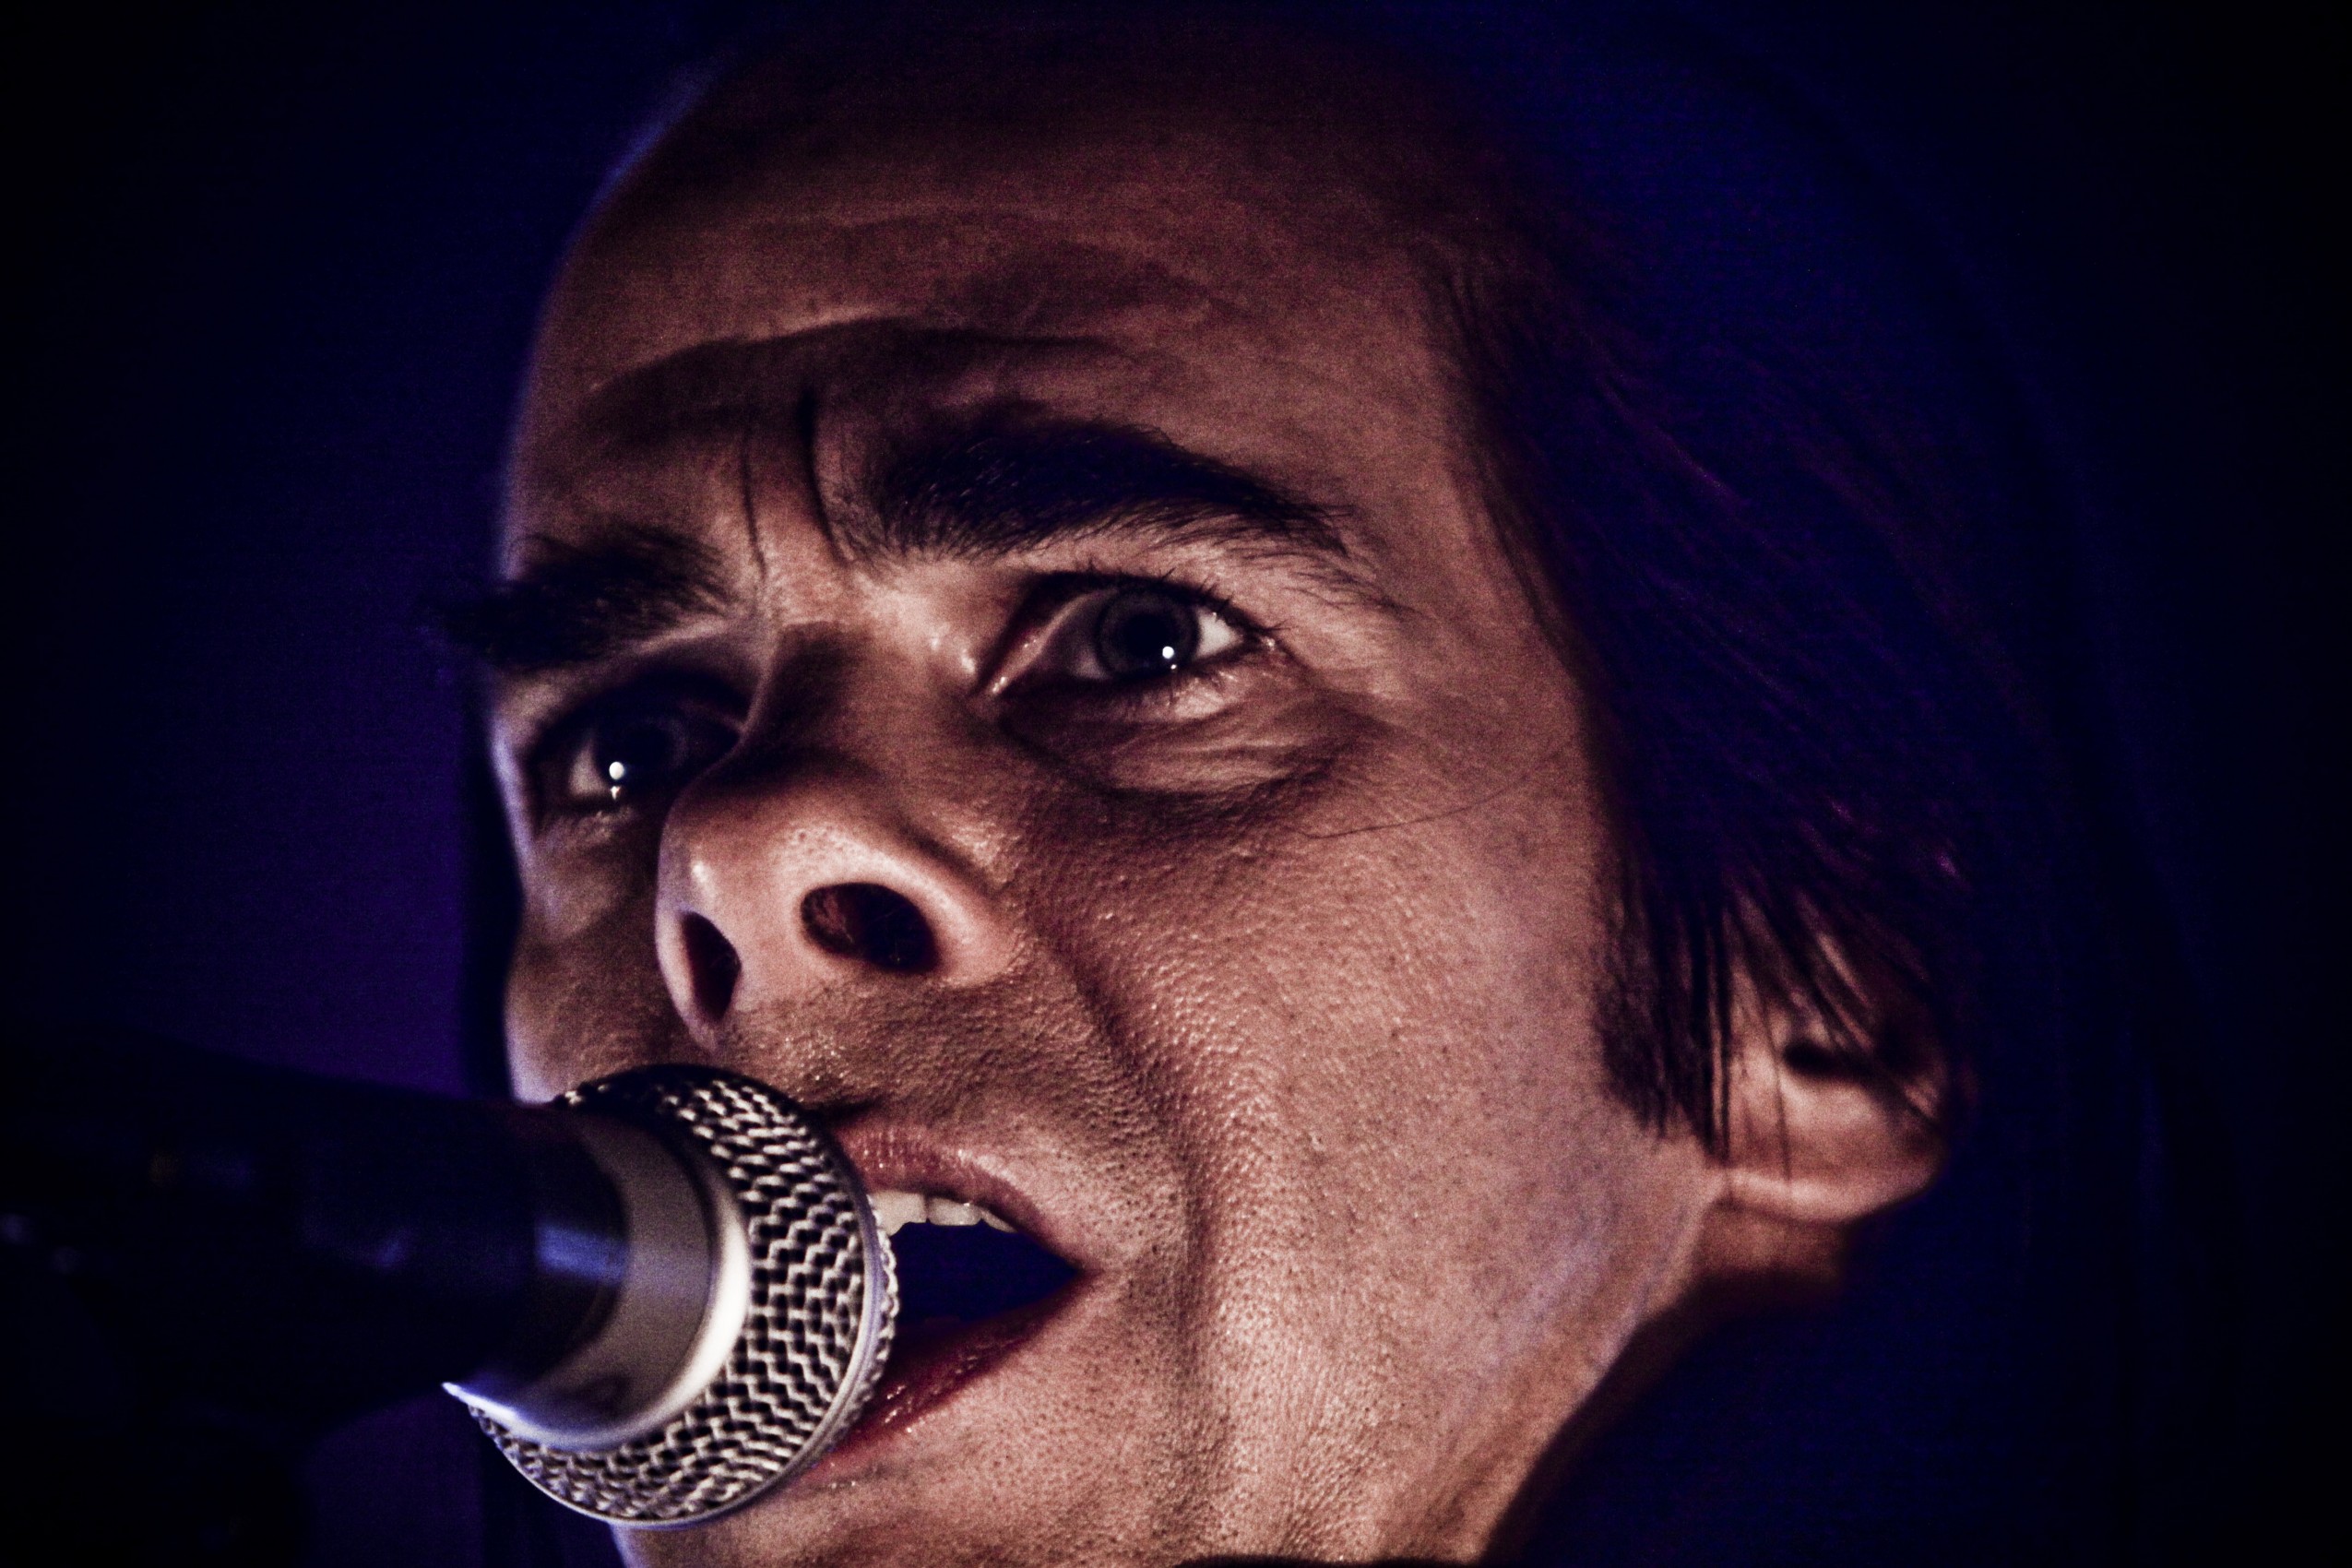 07 Oct 2010, Rome, Italy --- Nick Cave perform in Rome. --- Image by © Simone Cecchetti/Corbis